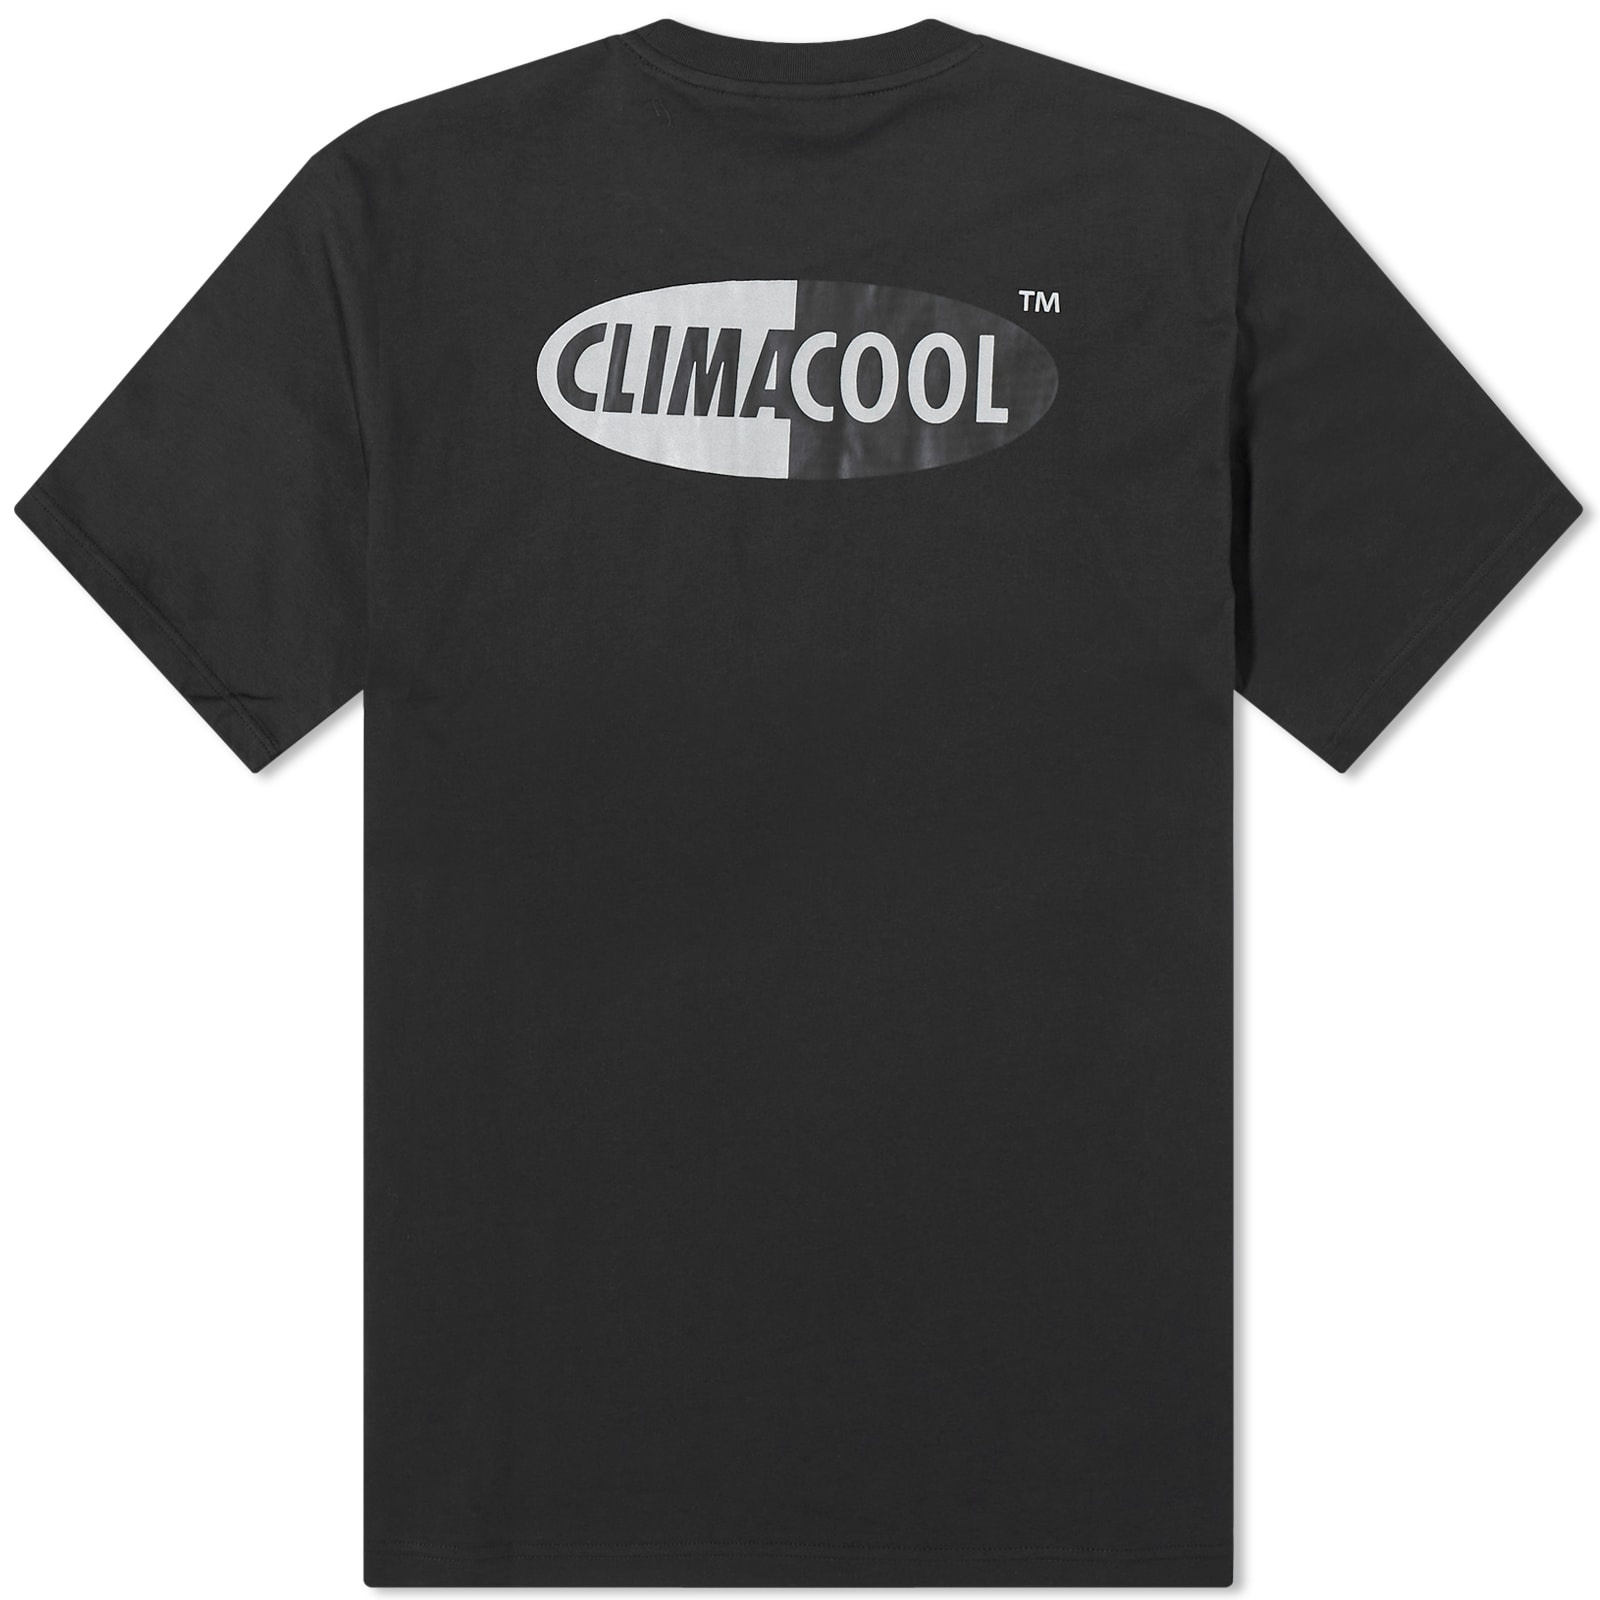 Adidas Climacool T-Shirt - 2